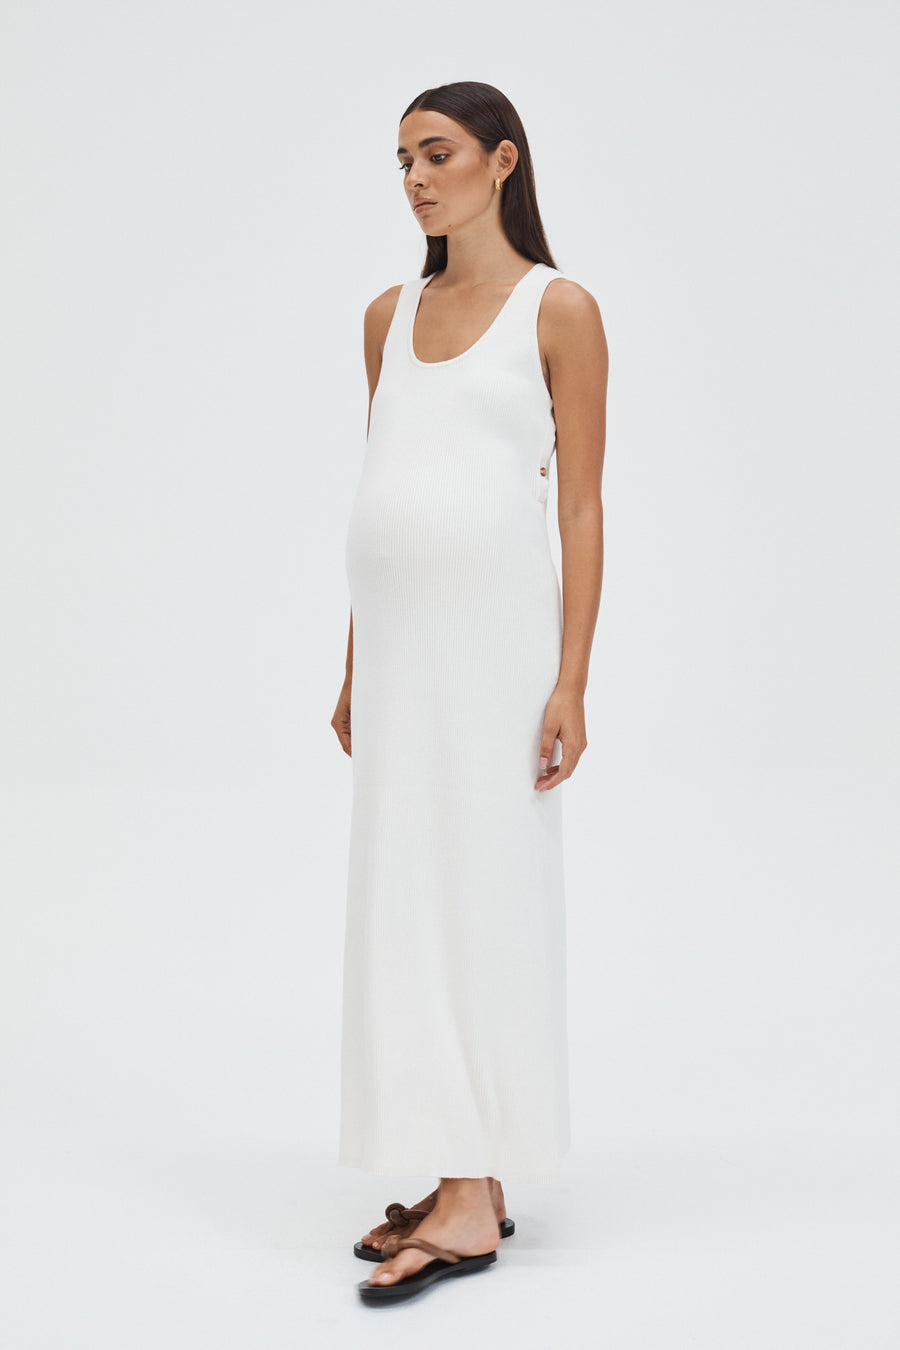 Stylish Baby Shower Dress (White) 3